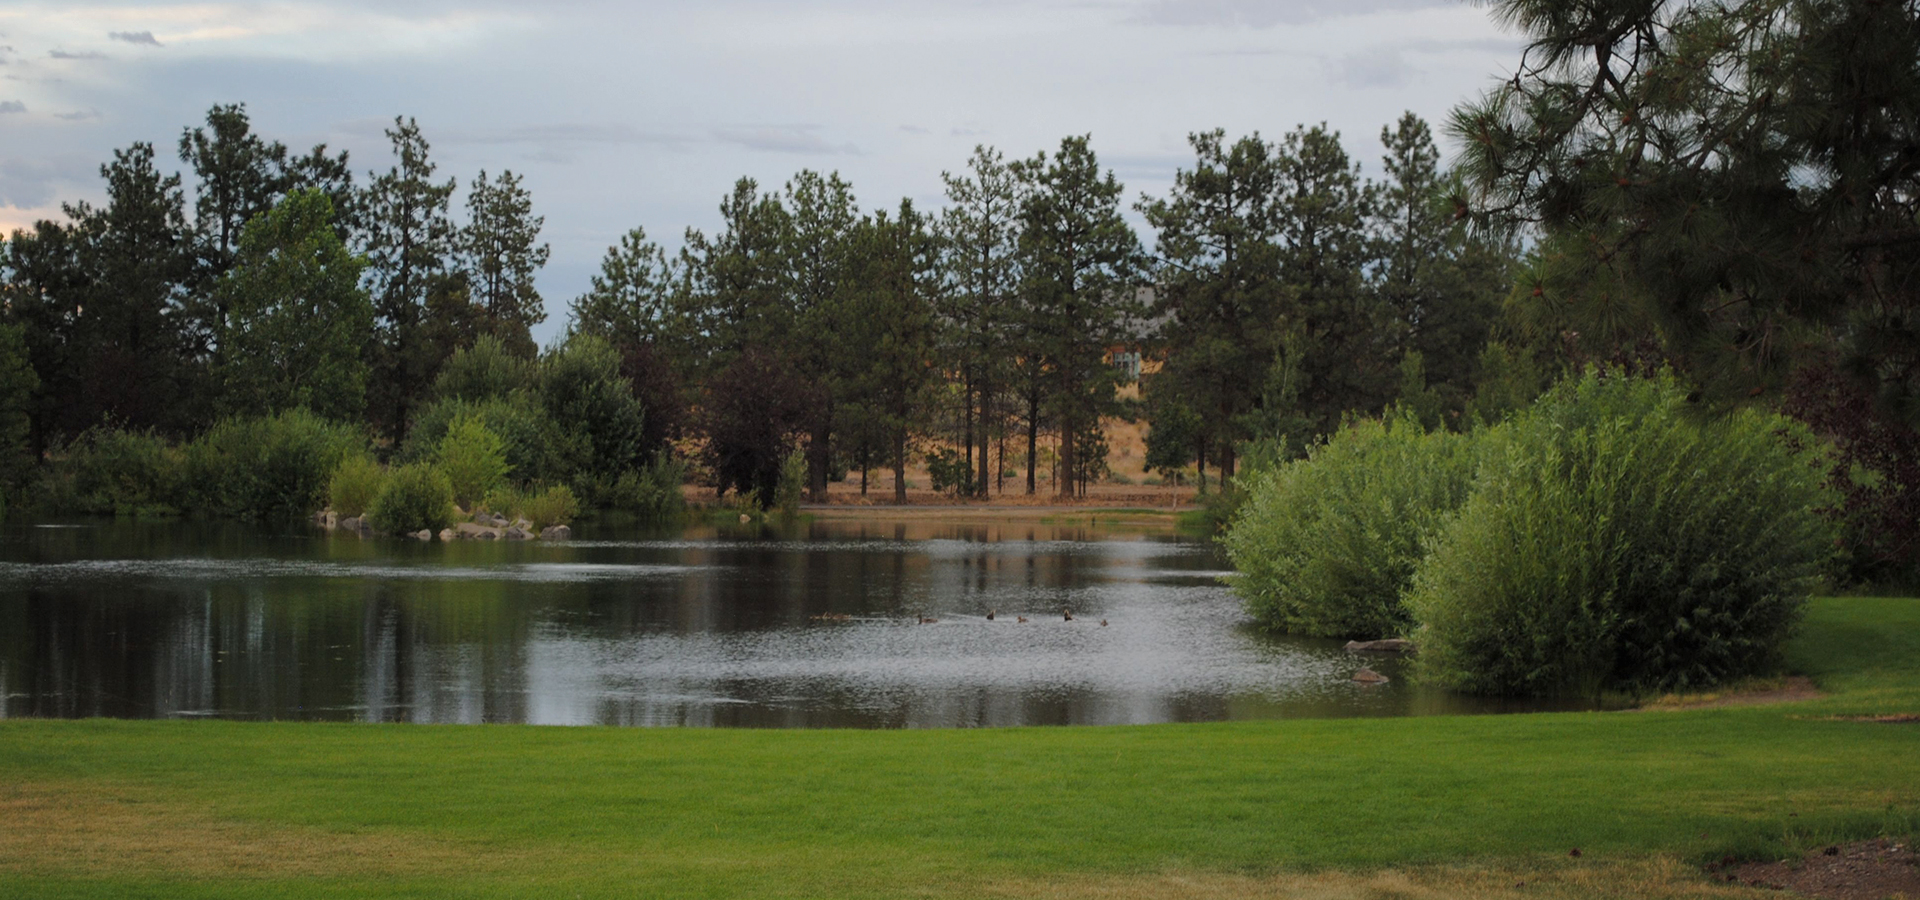 The fishing pond at Pine Nursery.